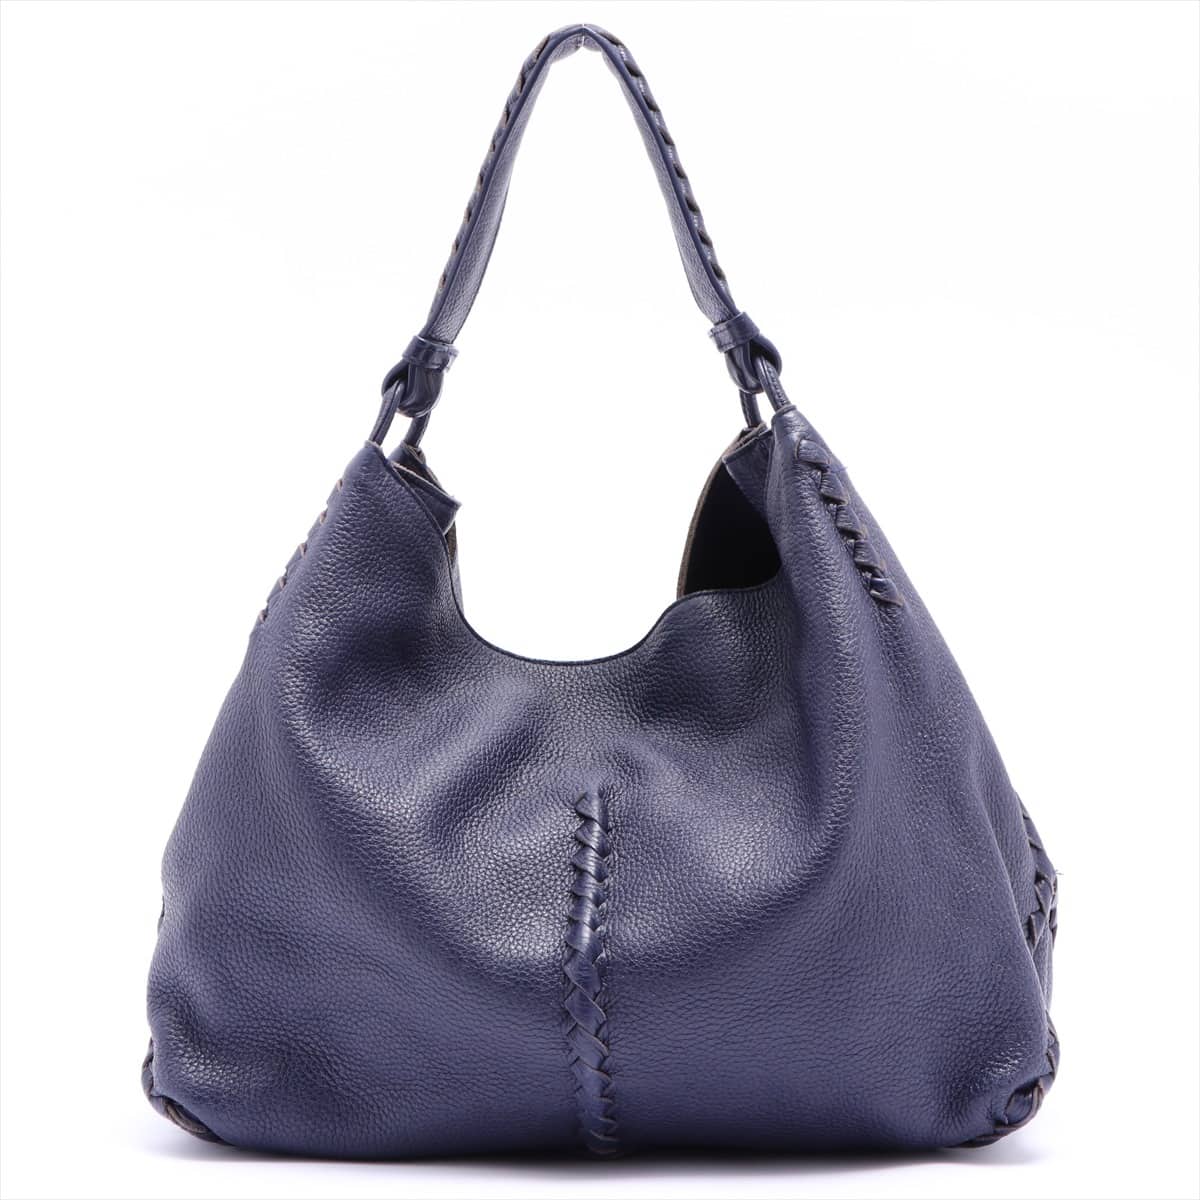 Bottega Veneta Intrecciato Leather One shoulder bag Navy blue